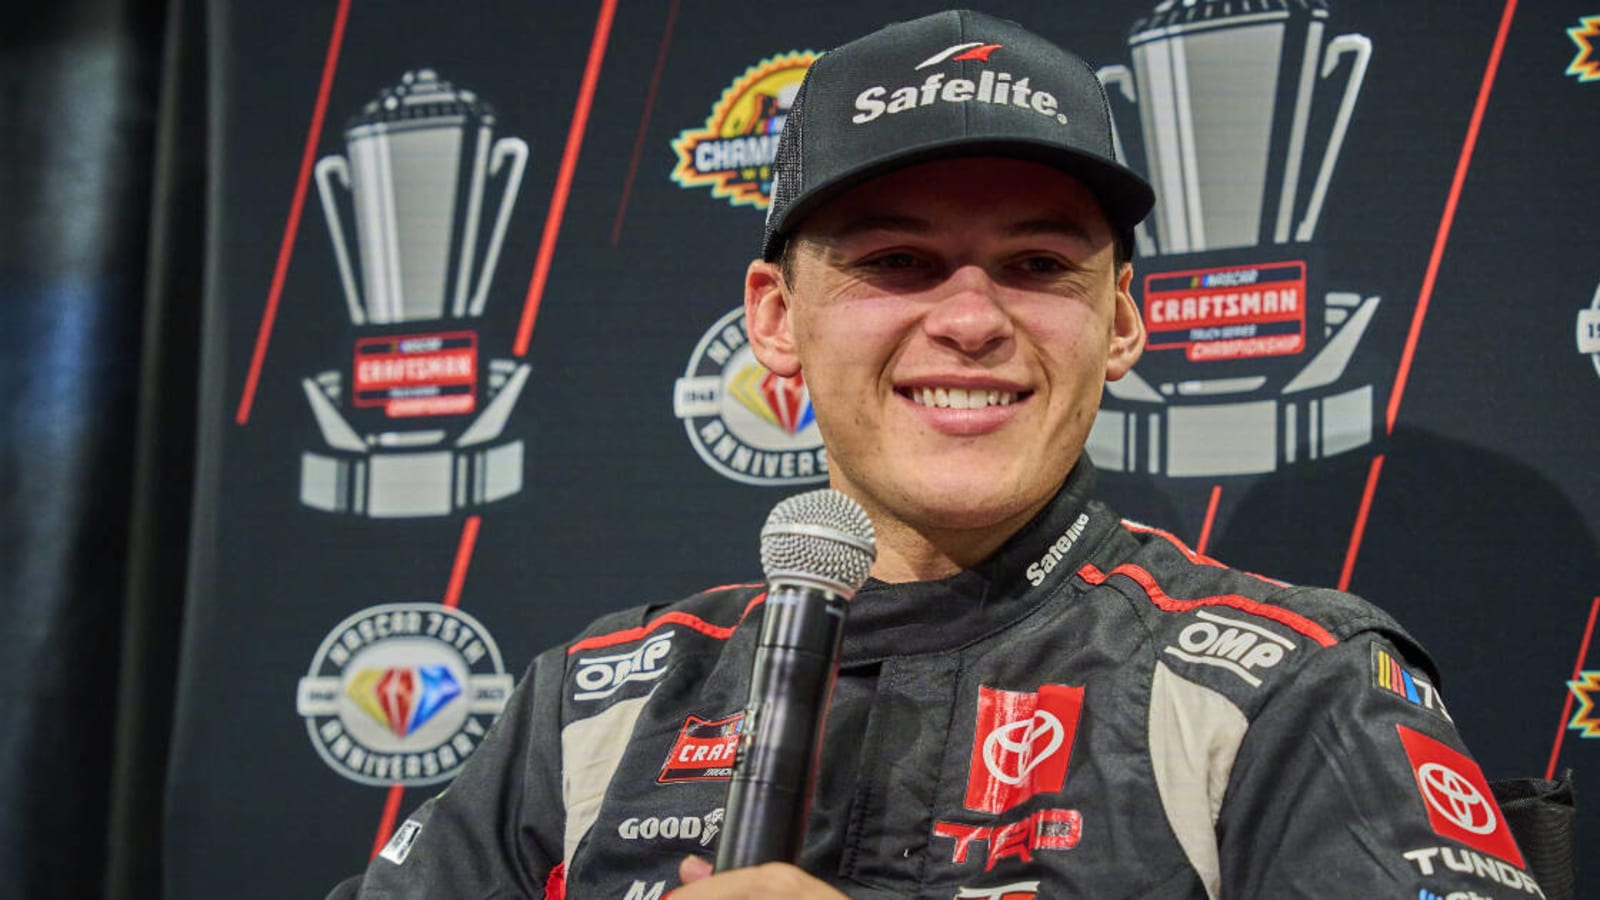 Corey Heim to race partial schedule in NASCAR Xfinity Series